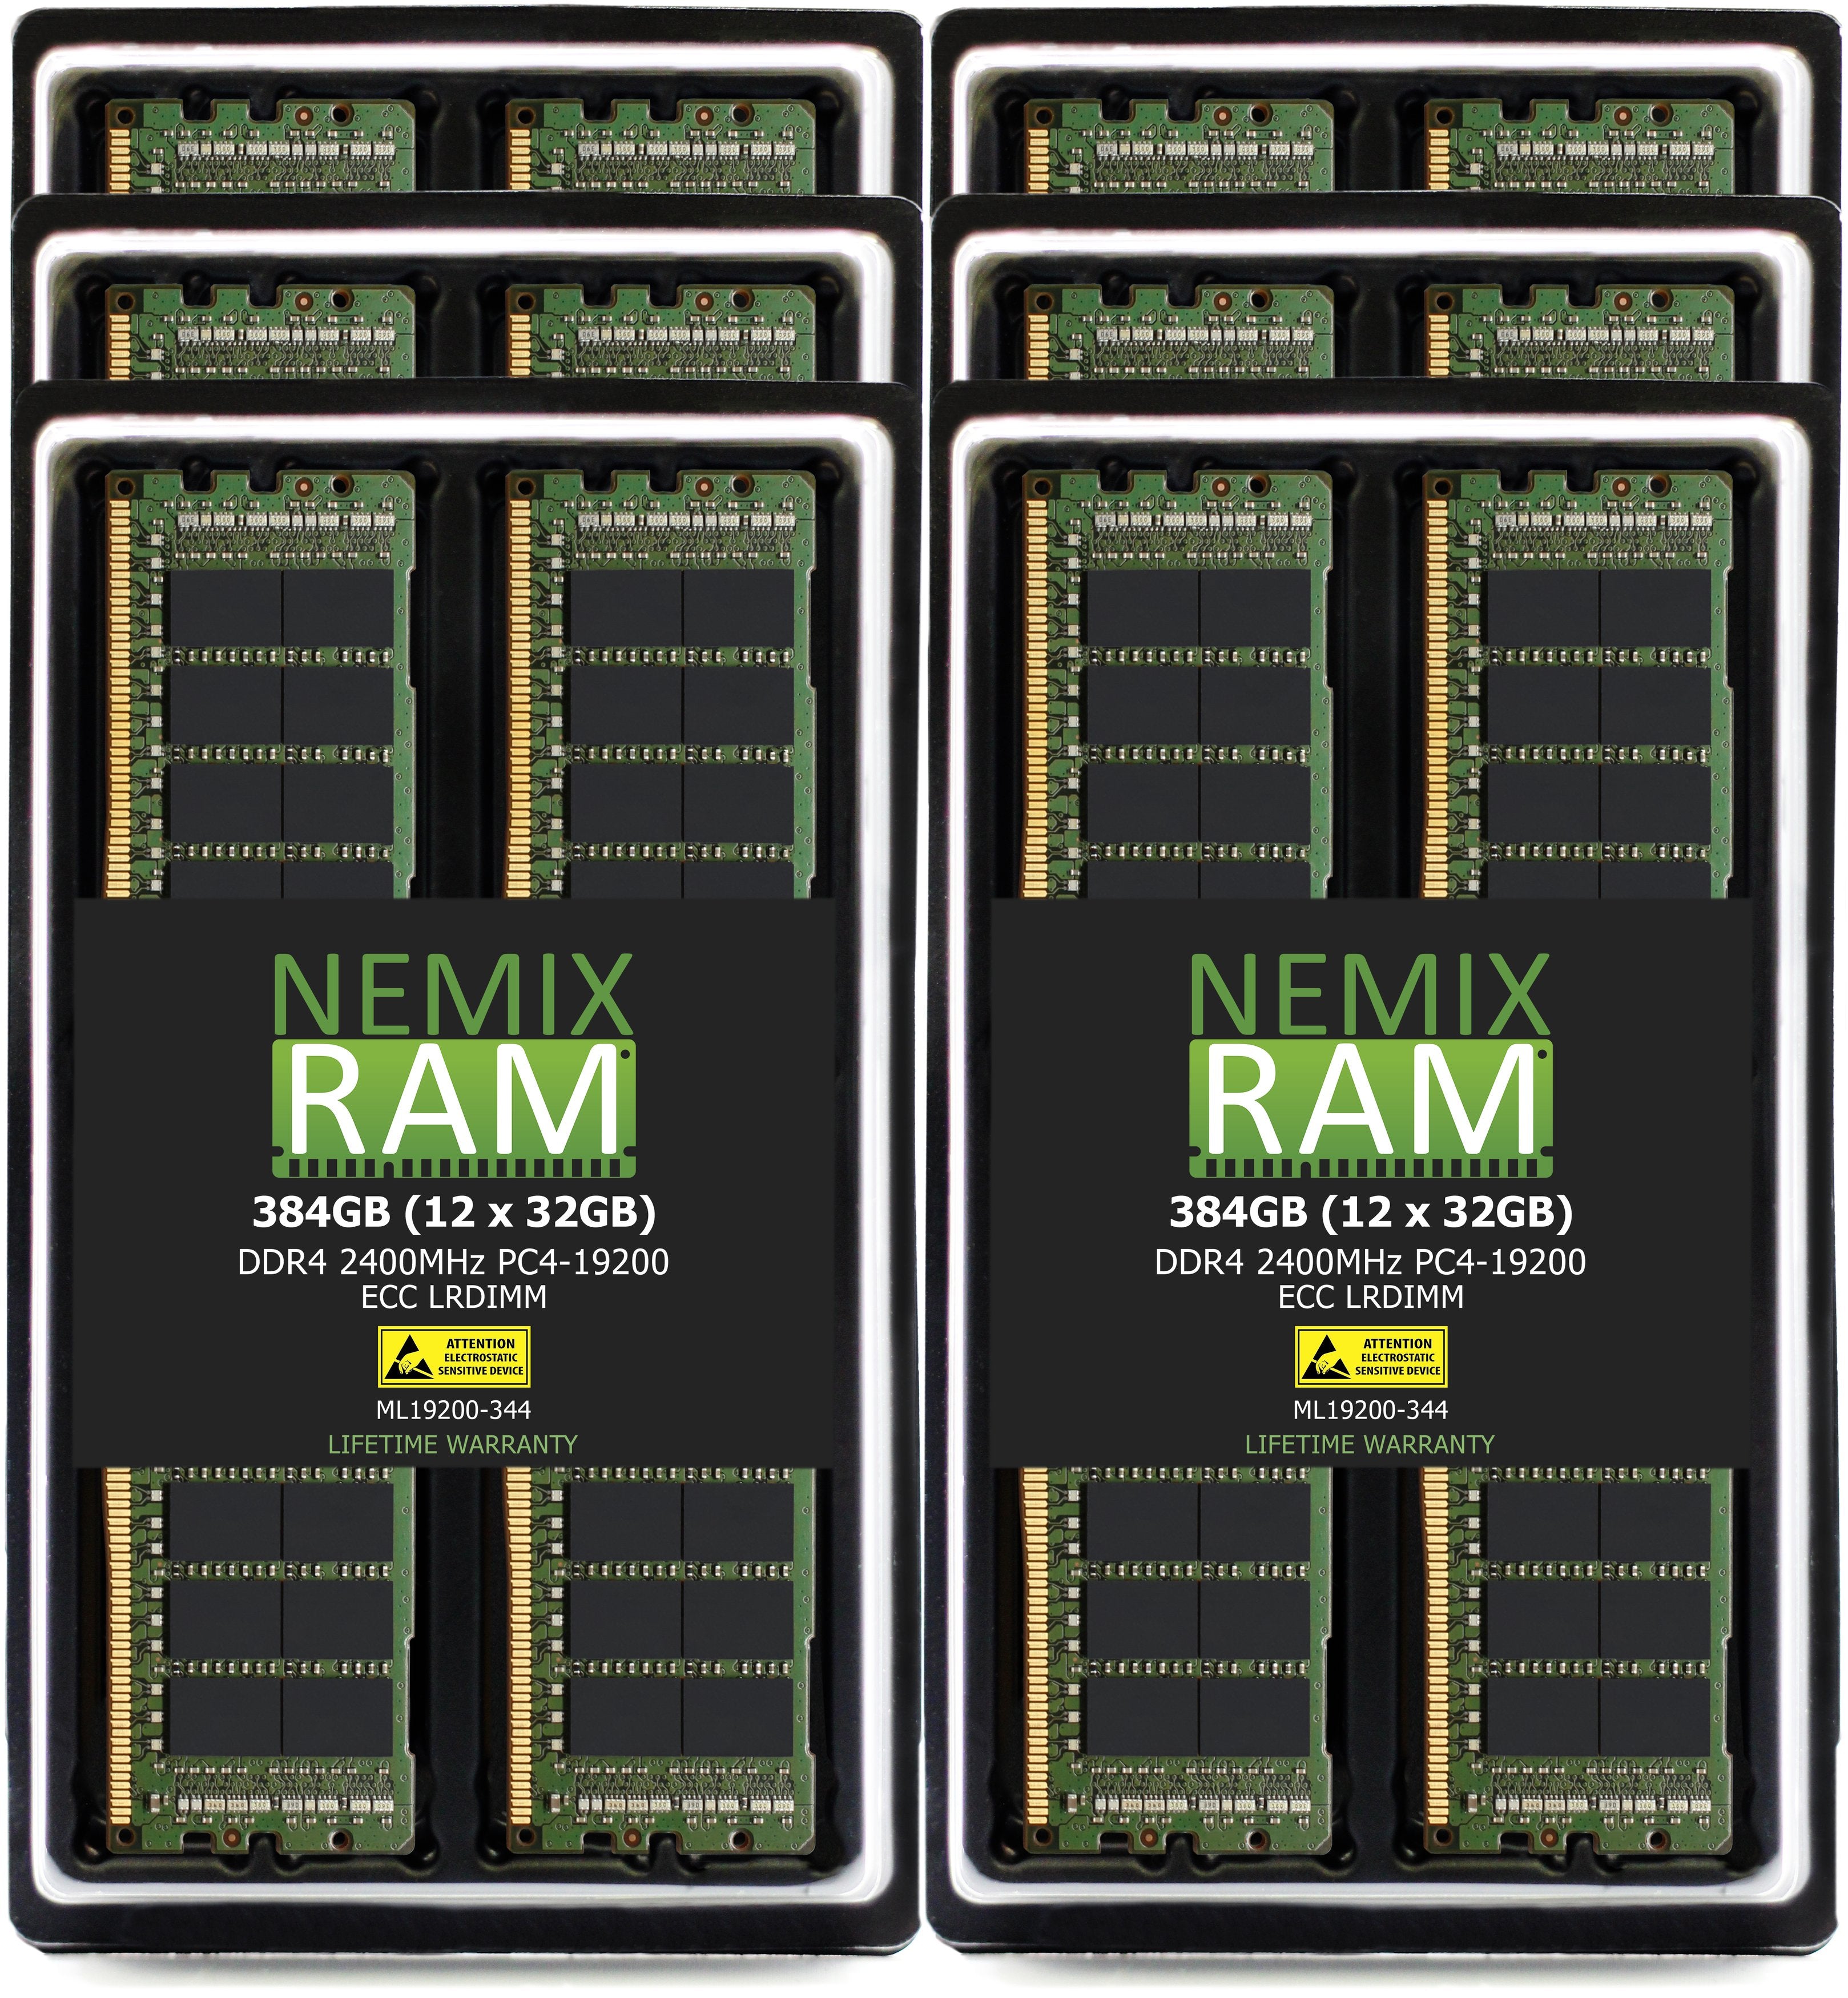 DDR4 2400MHZ PC4-19200 LRDIMM 4RX4